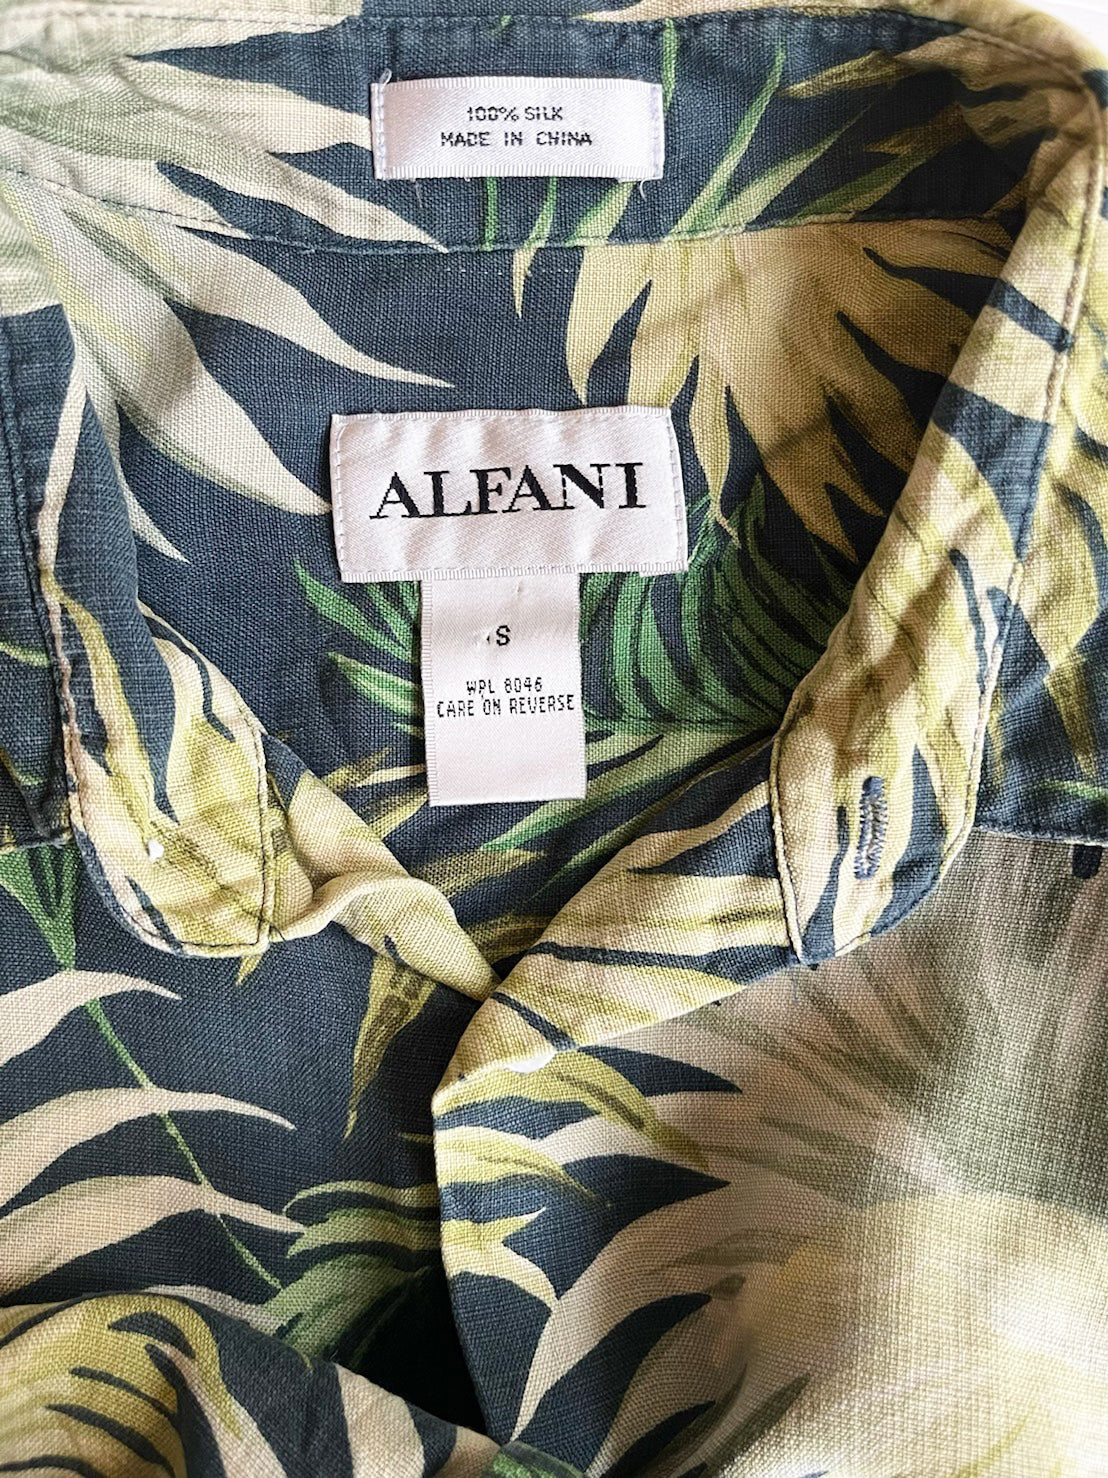 【ALFANI】 All Over Pattan Silk Aloha Shirt アルファニ オールオーバーパターン リーフ柄 開襟 シルク アロハシャツ （men's S)